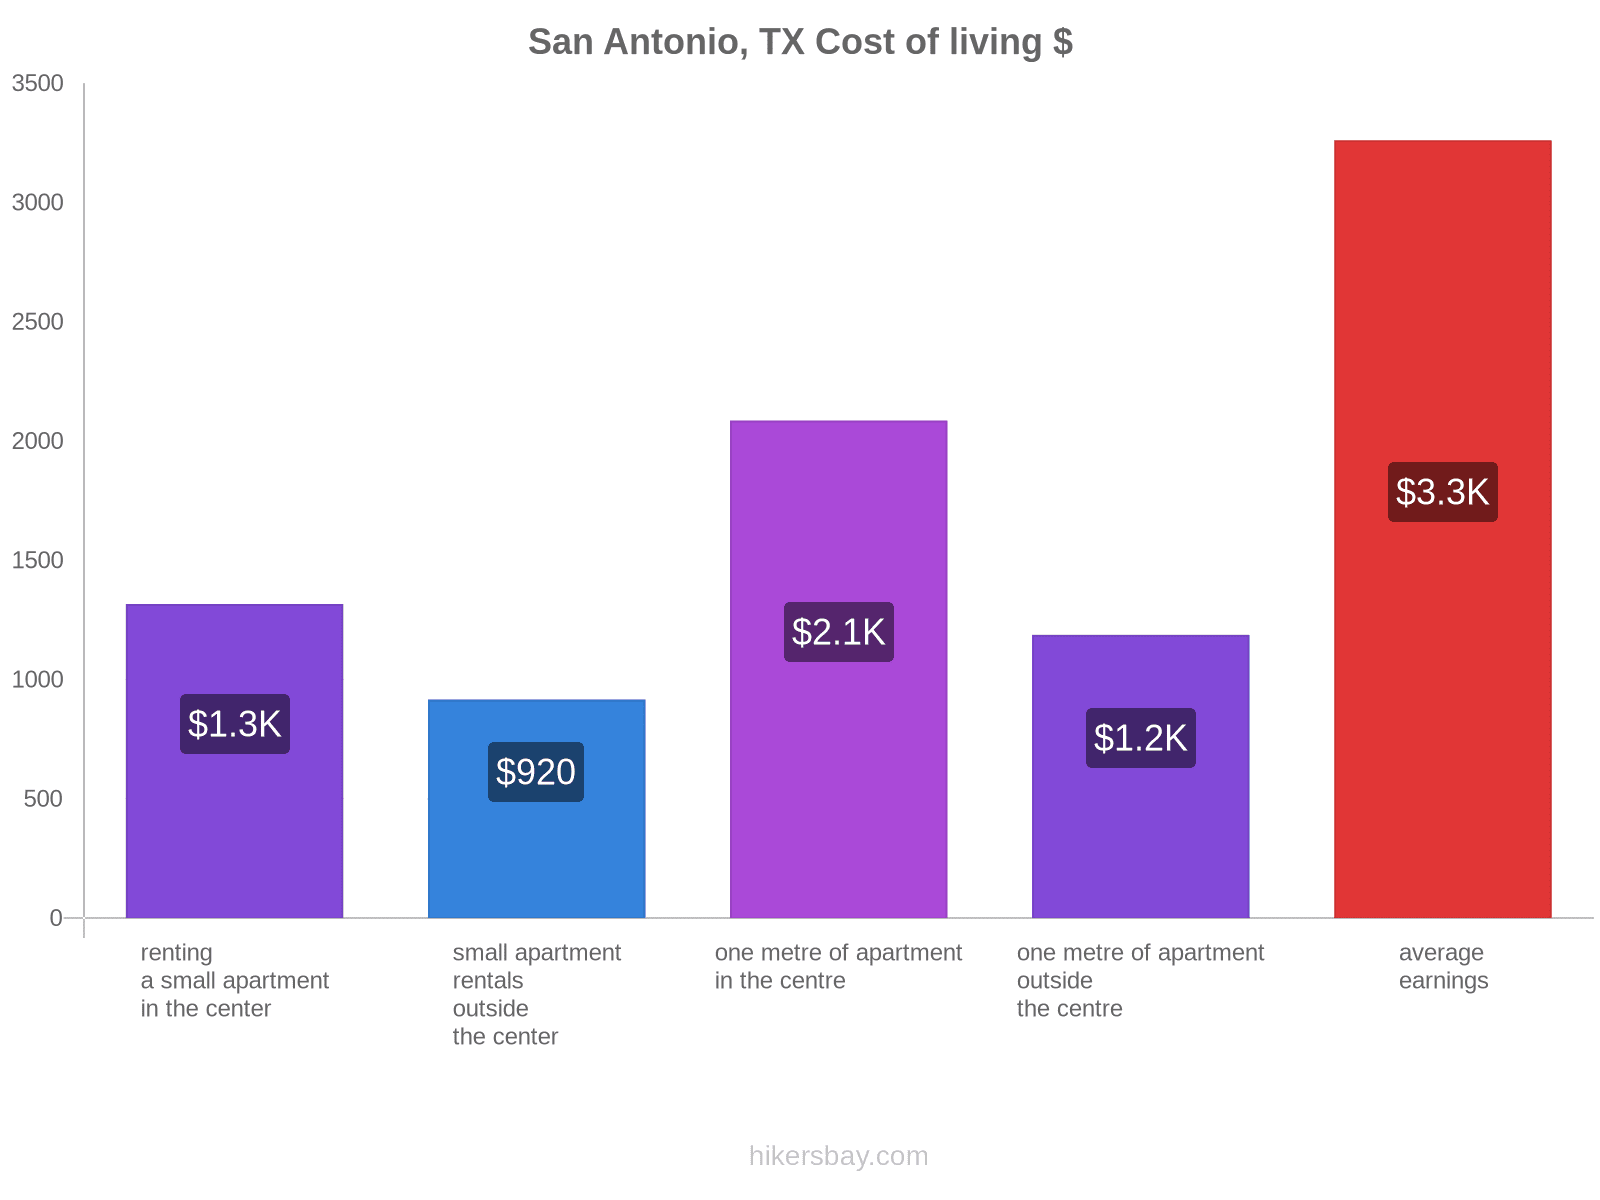 San Antonio, TX cost of living hikersbay.com